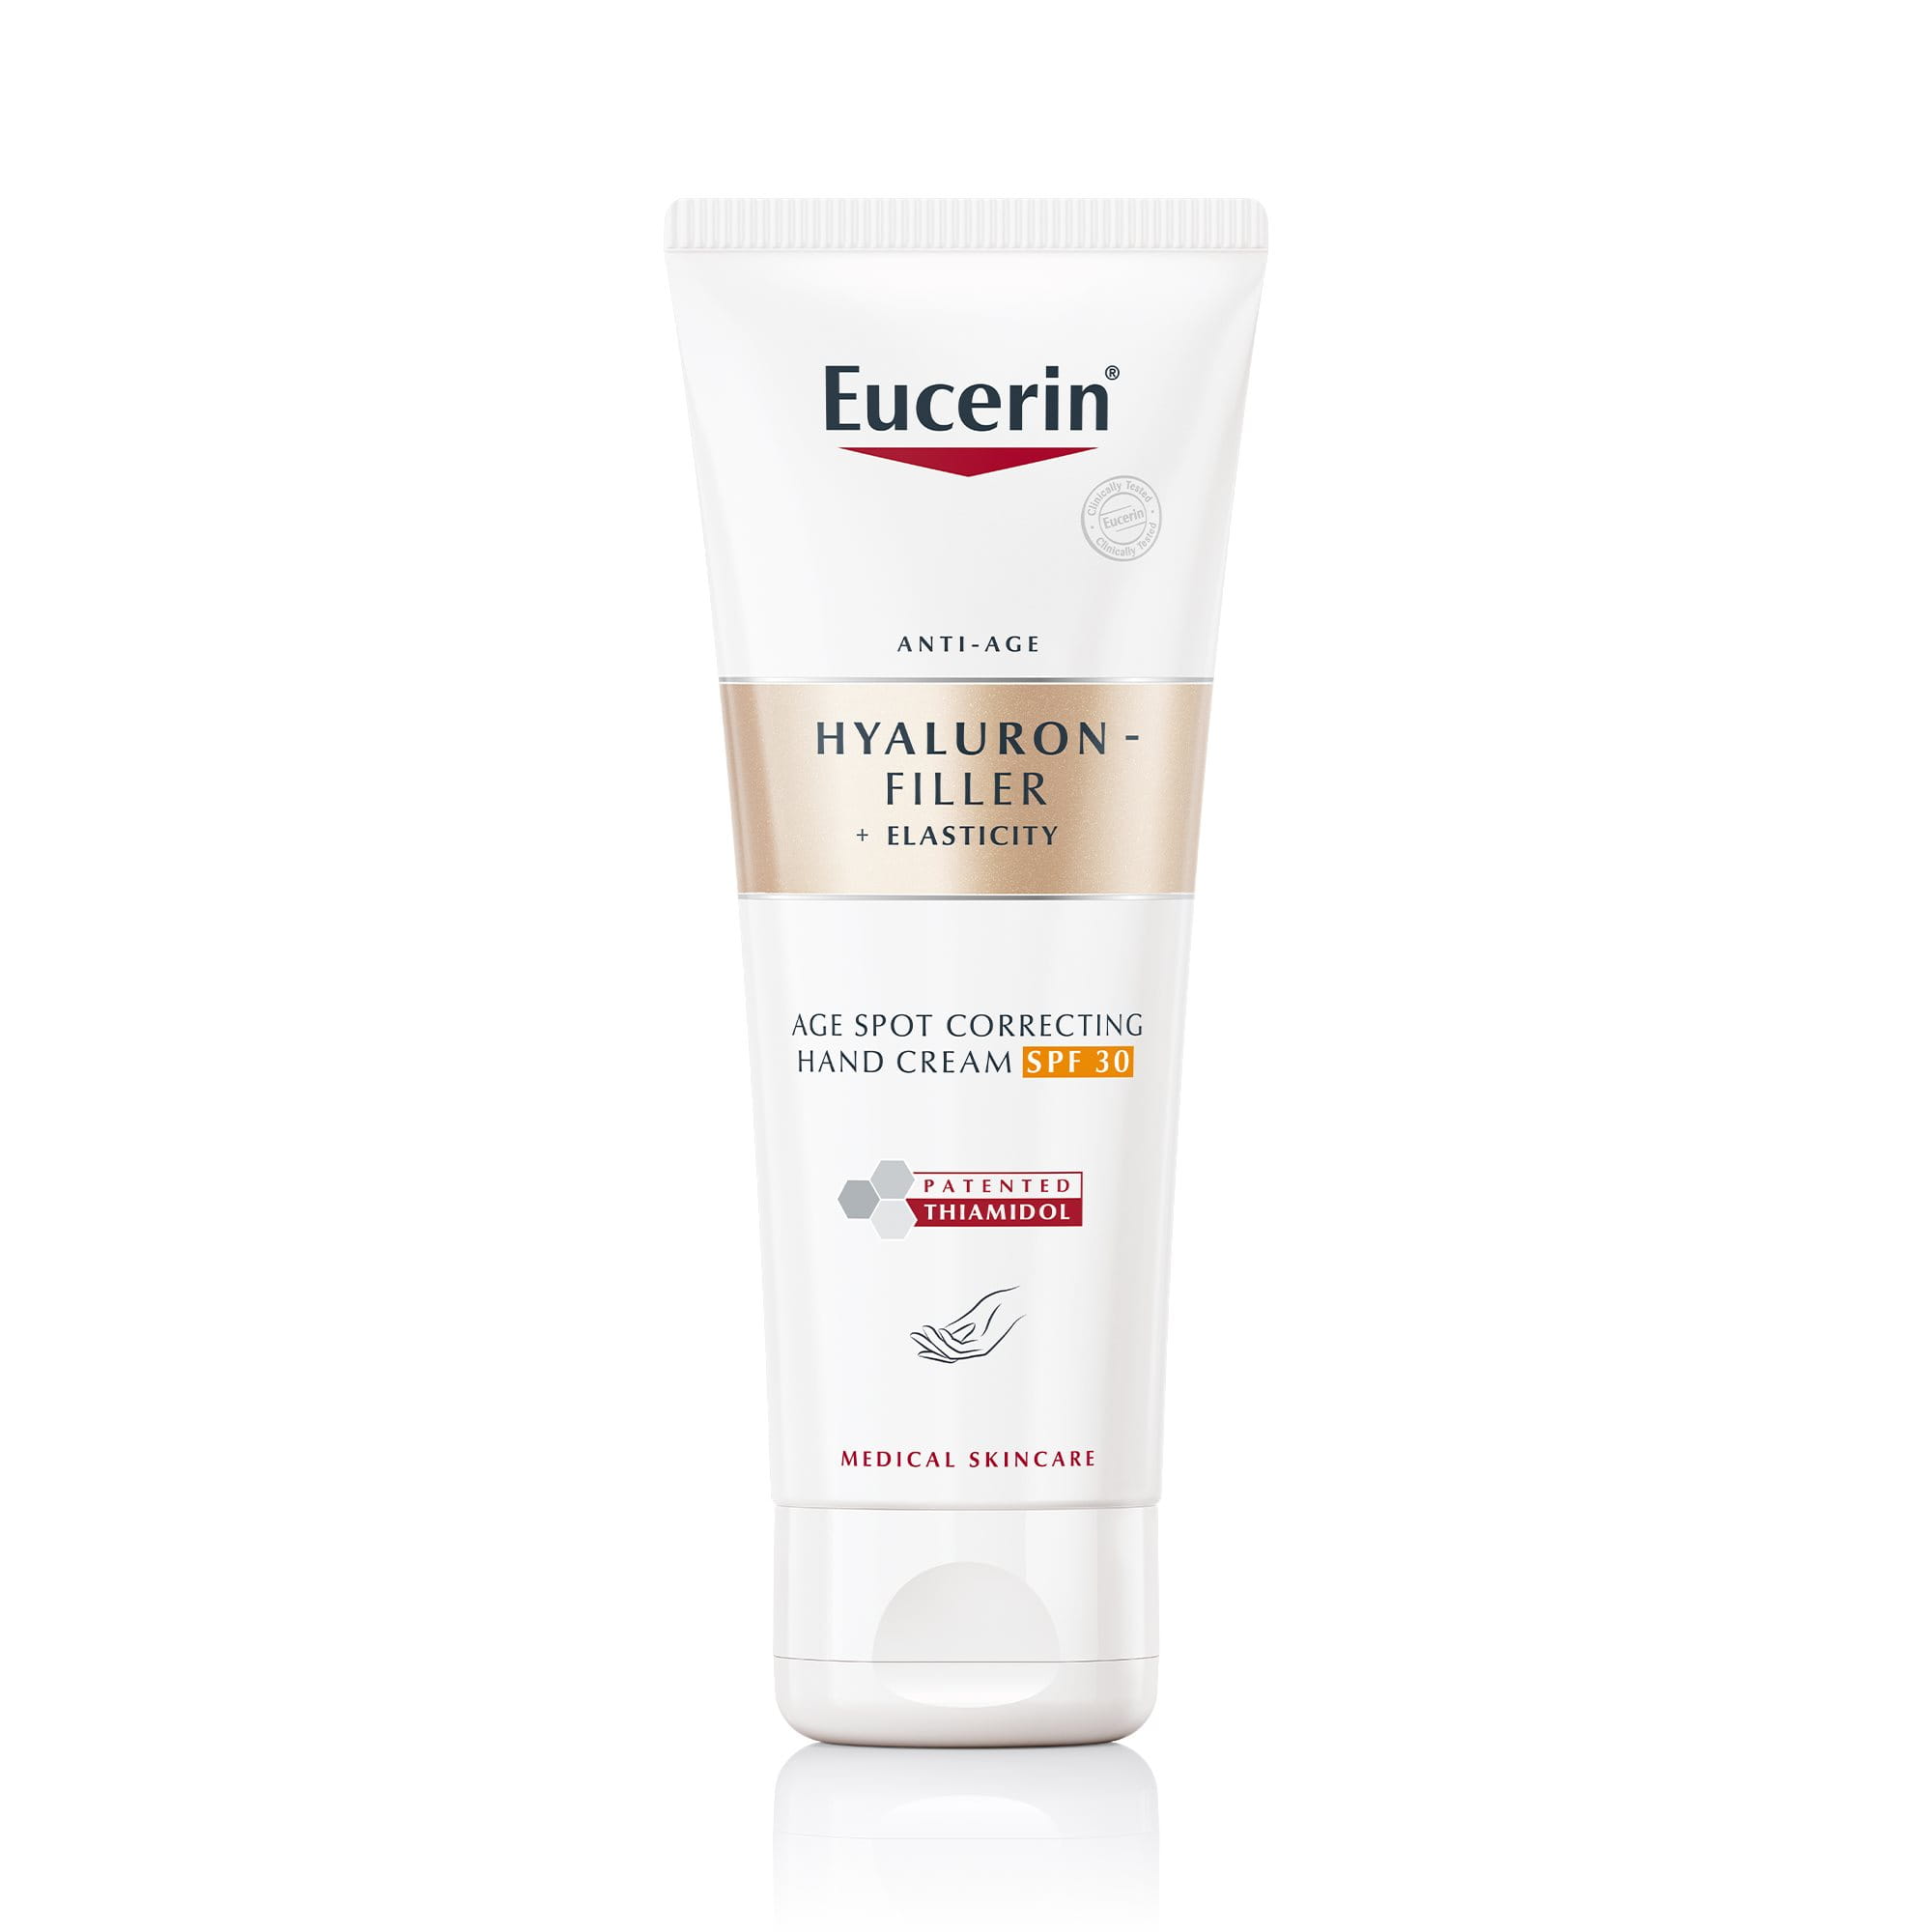 Eucerin Hyaluron-Filler + Elasticity Age Spot Correcting Hand Cream